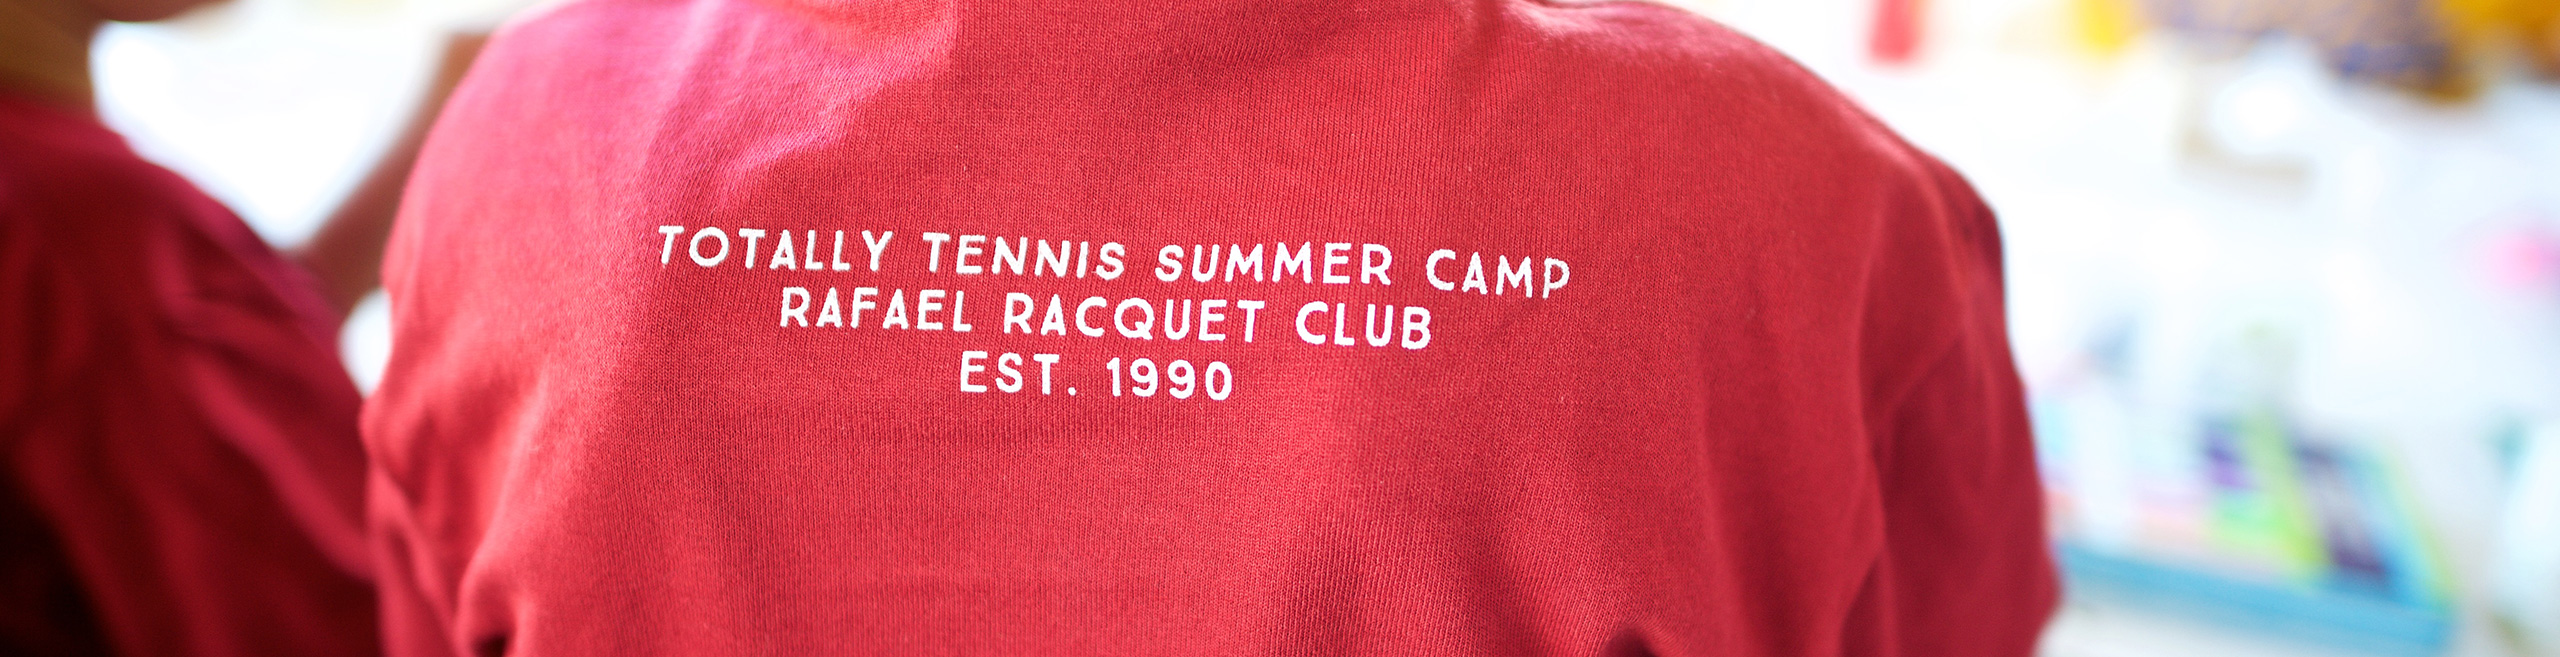 Totally Tennis Summer Camp at RRC